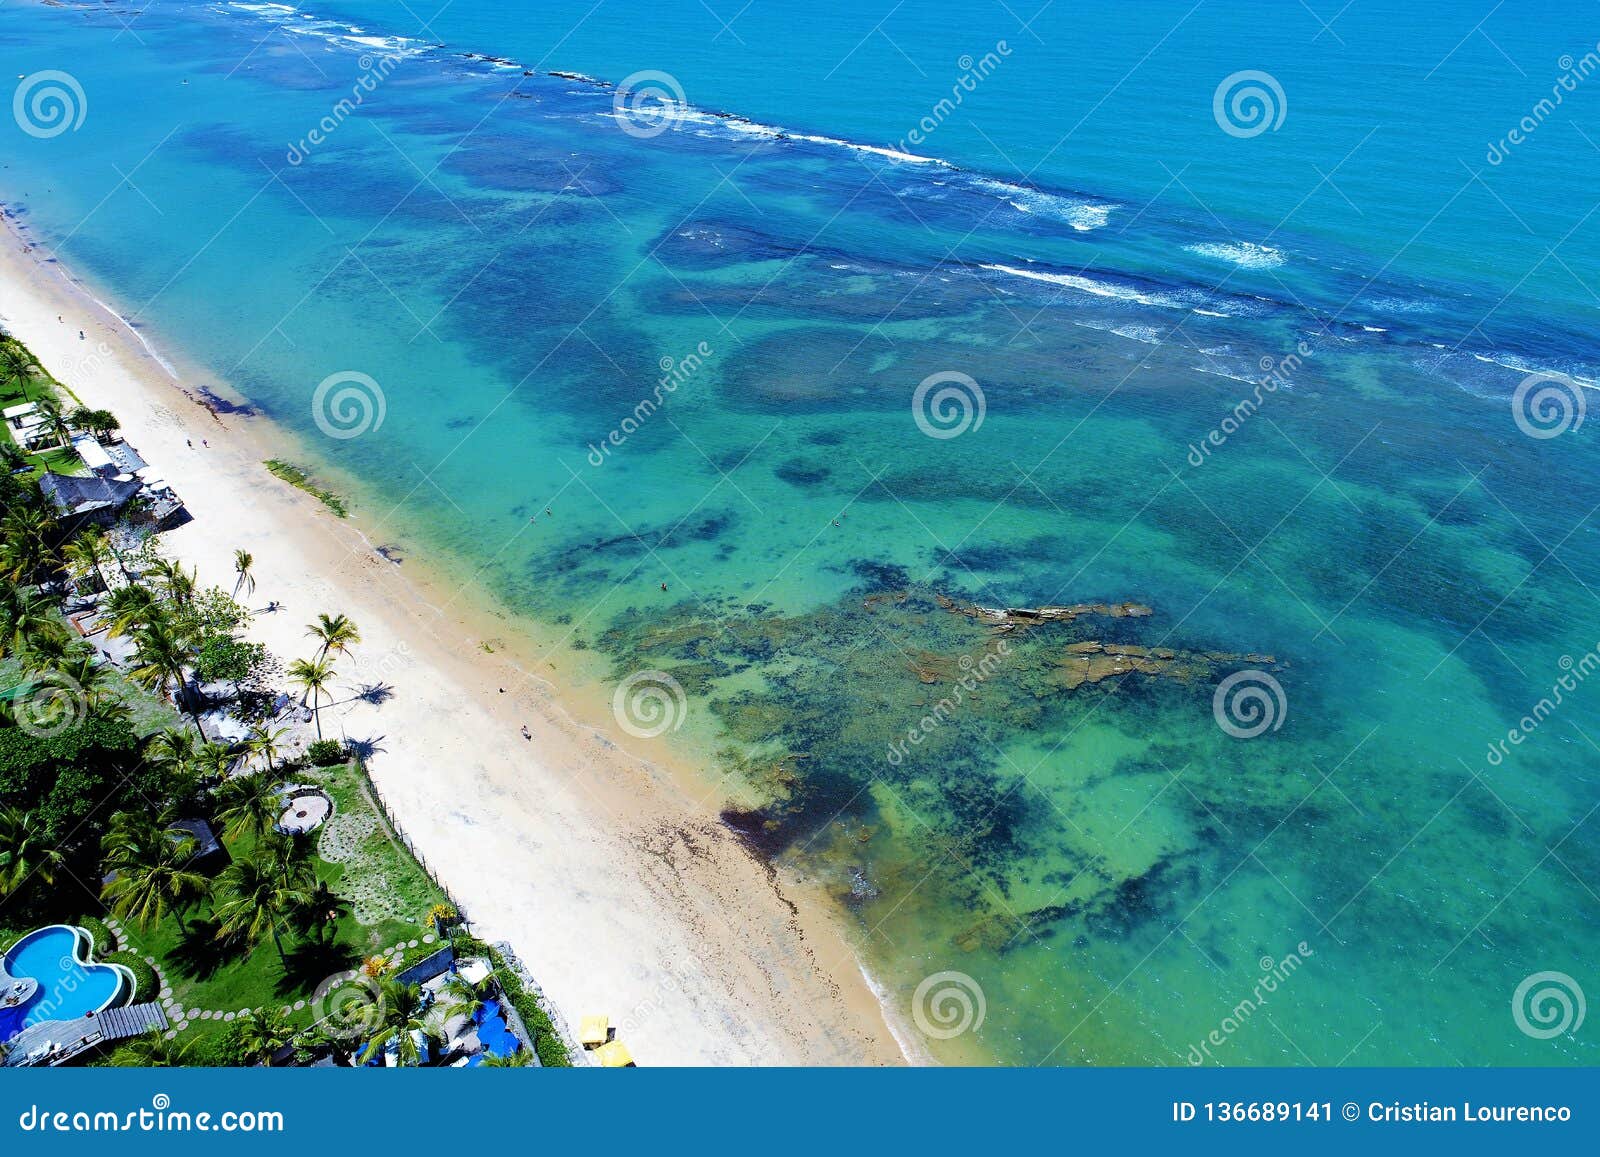 arraial d`ajuda, bahia, brazil: view of beautiful beach with two colors of water.